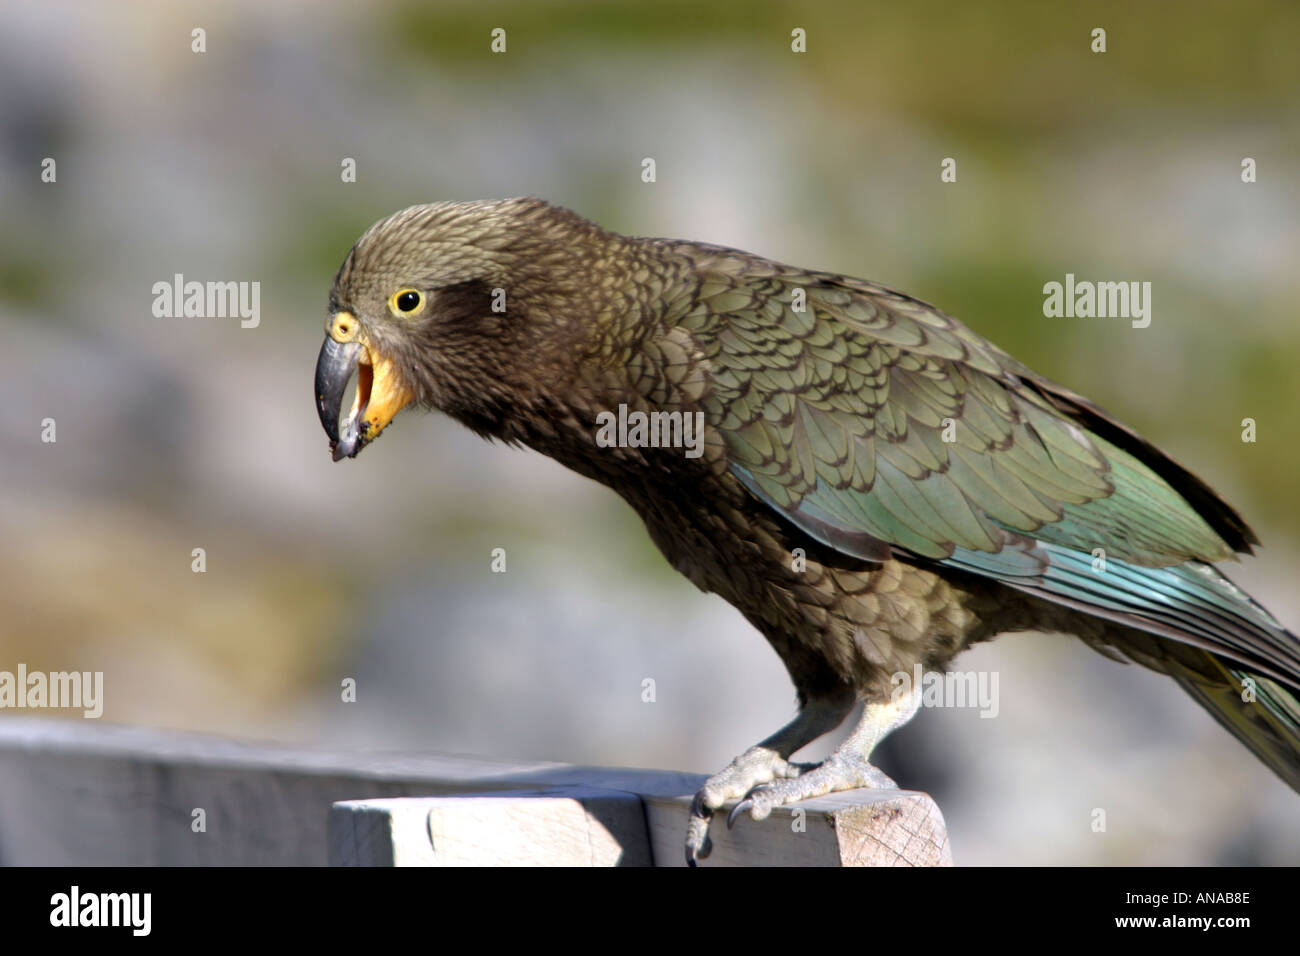 Kea the inquisitive parrot like bird in New Zealand Stock Photo